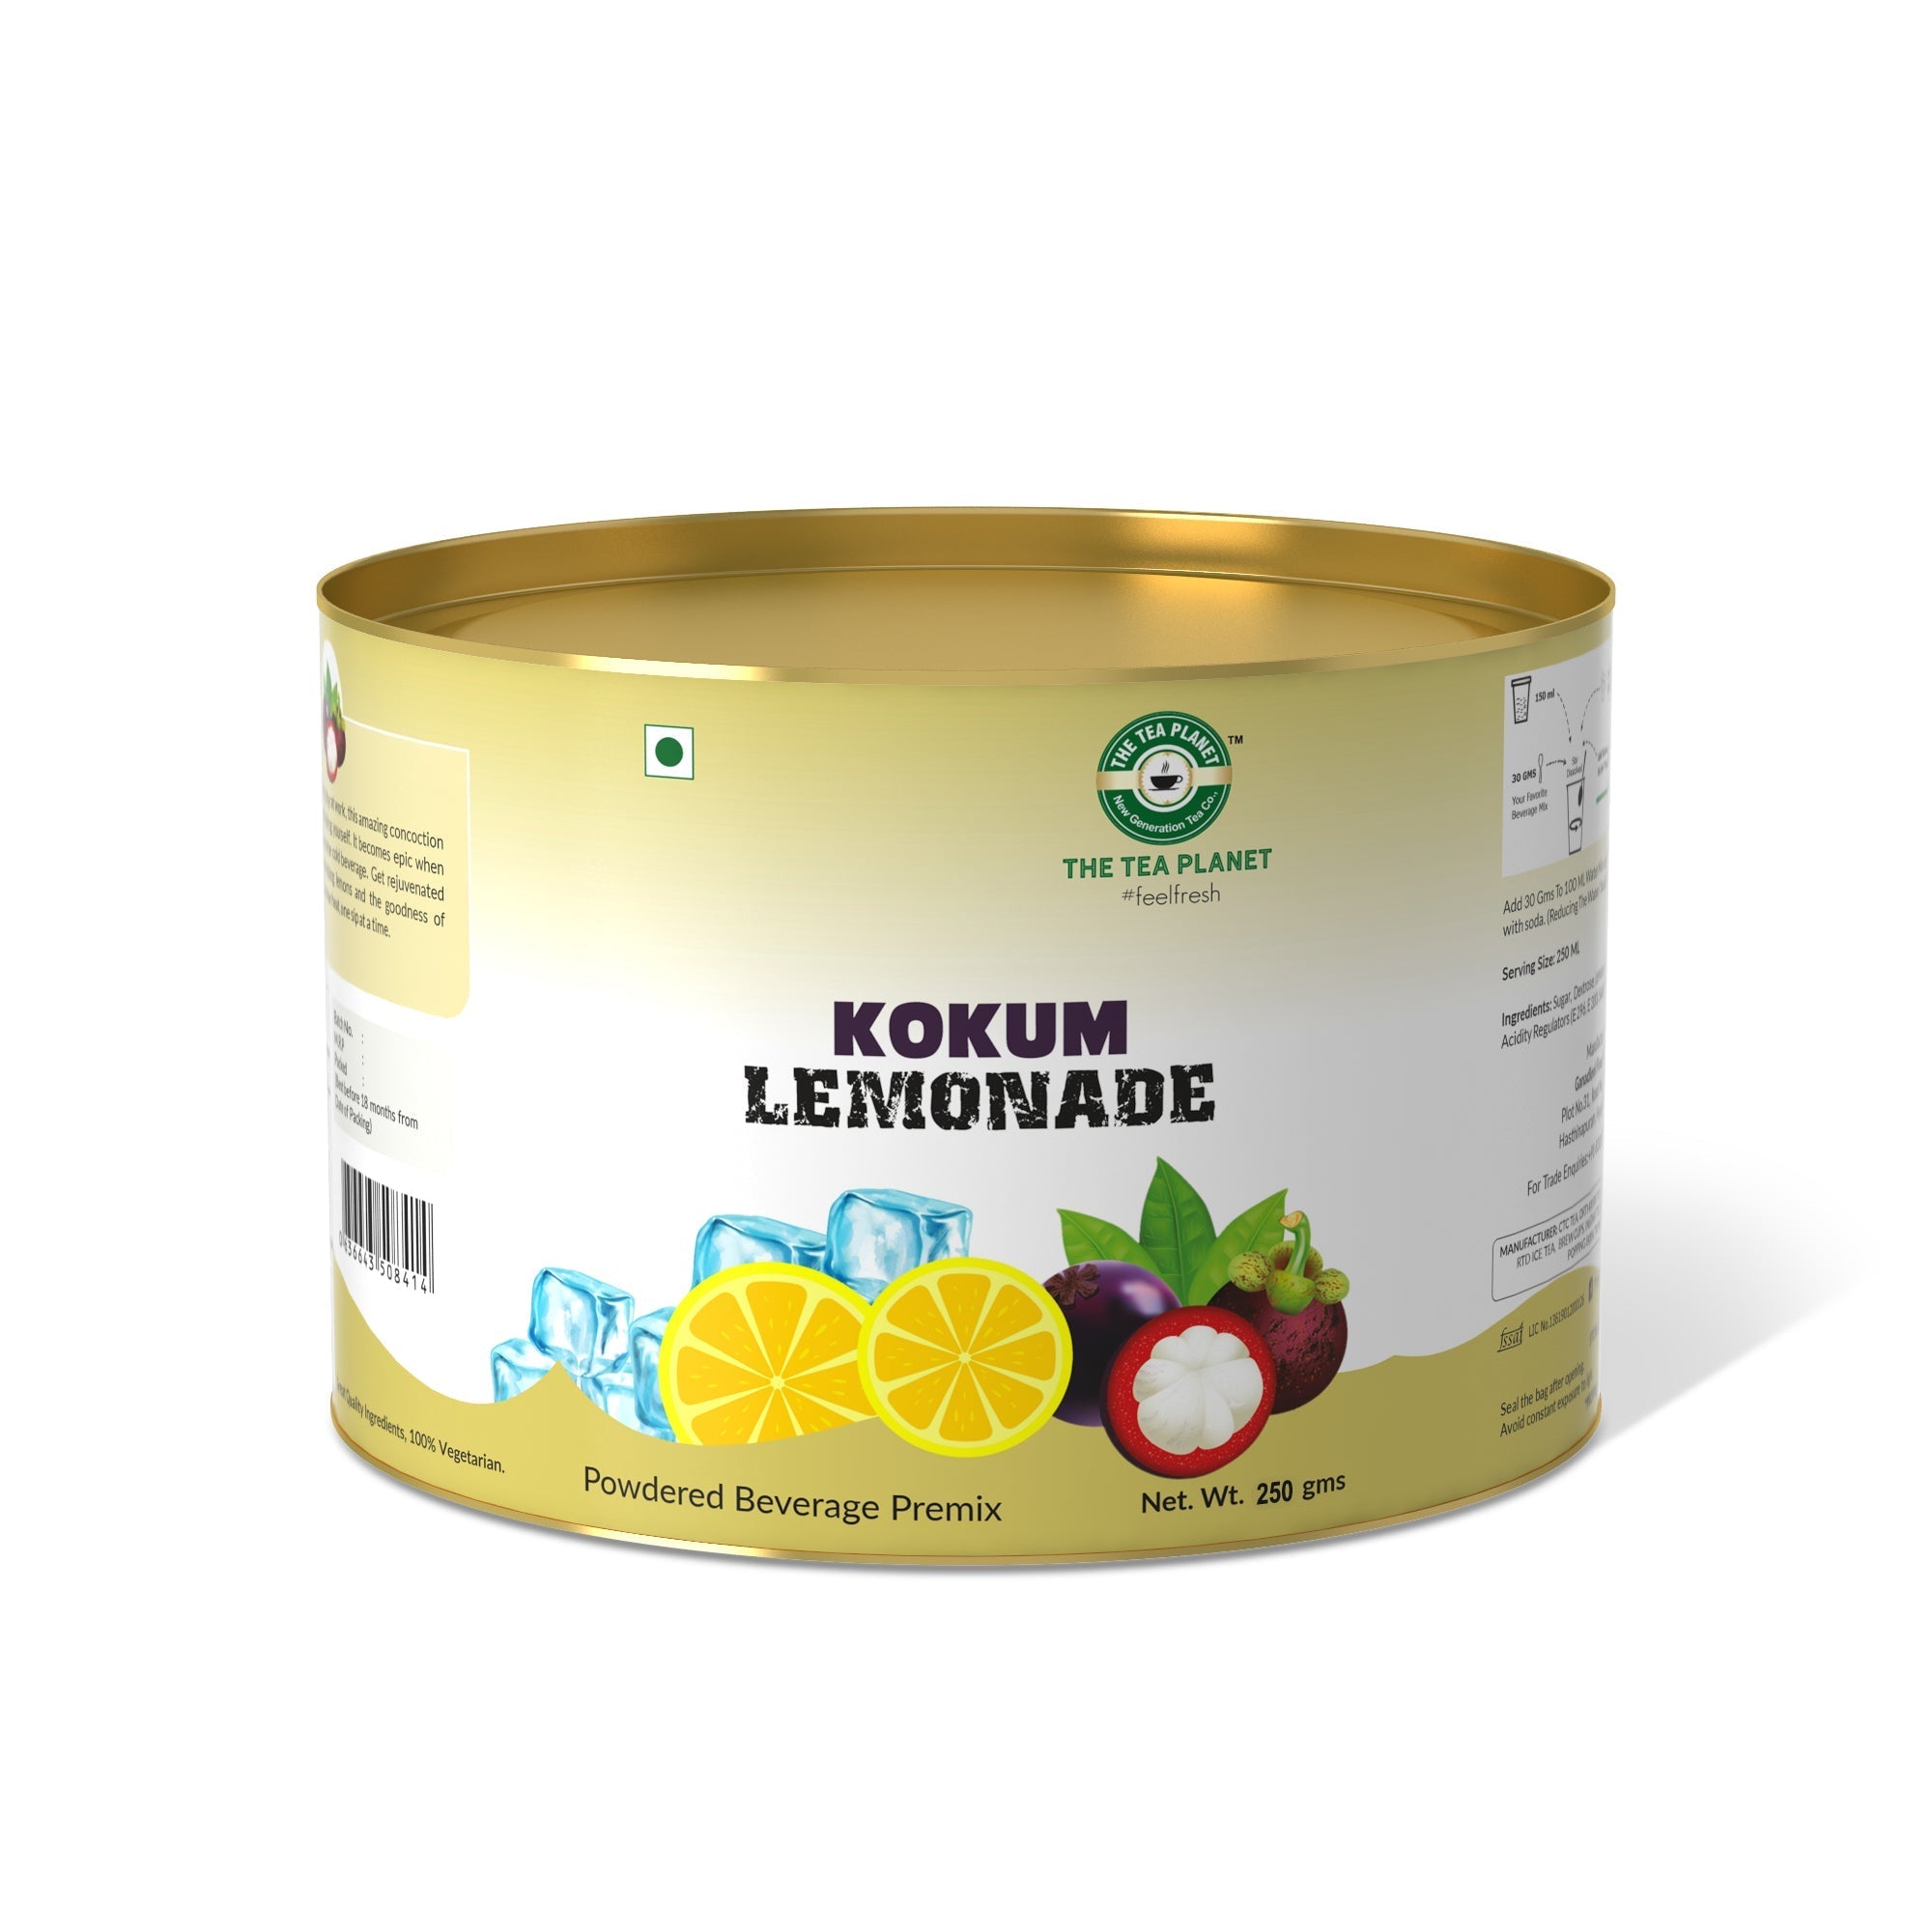 Kokum Lemonade Premix - 400 gms